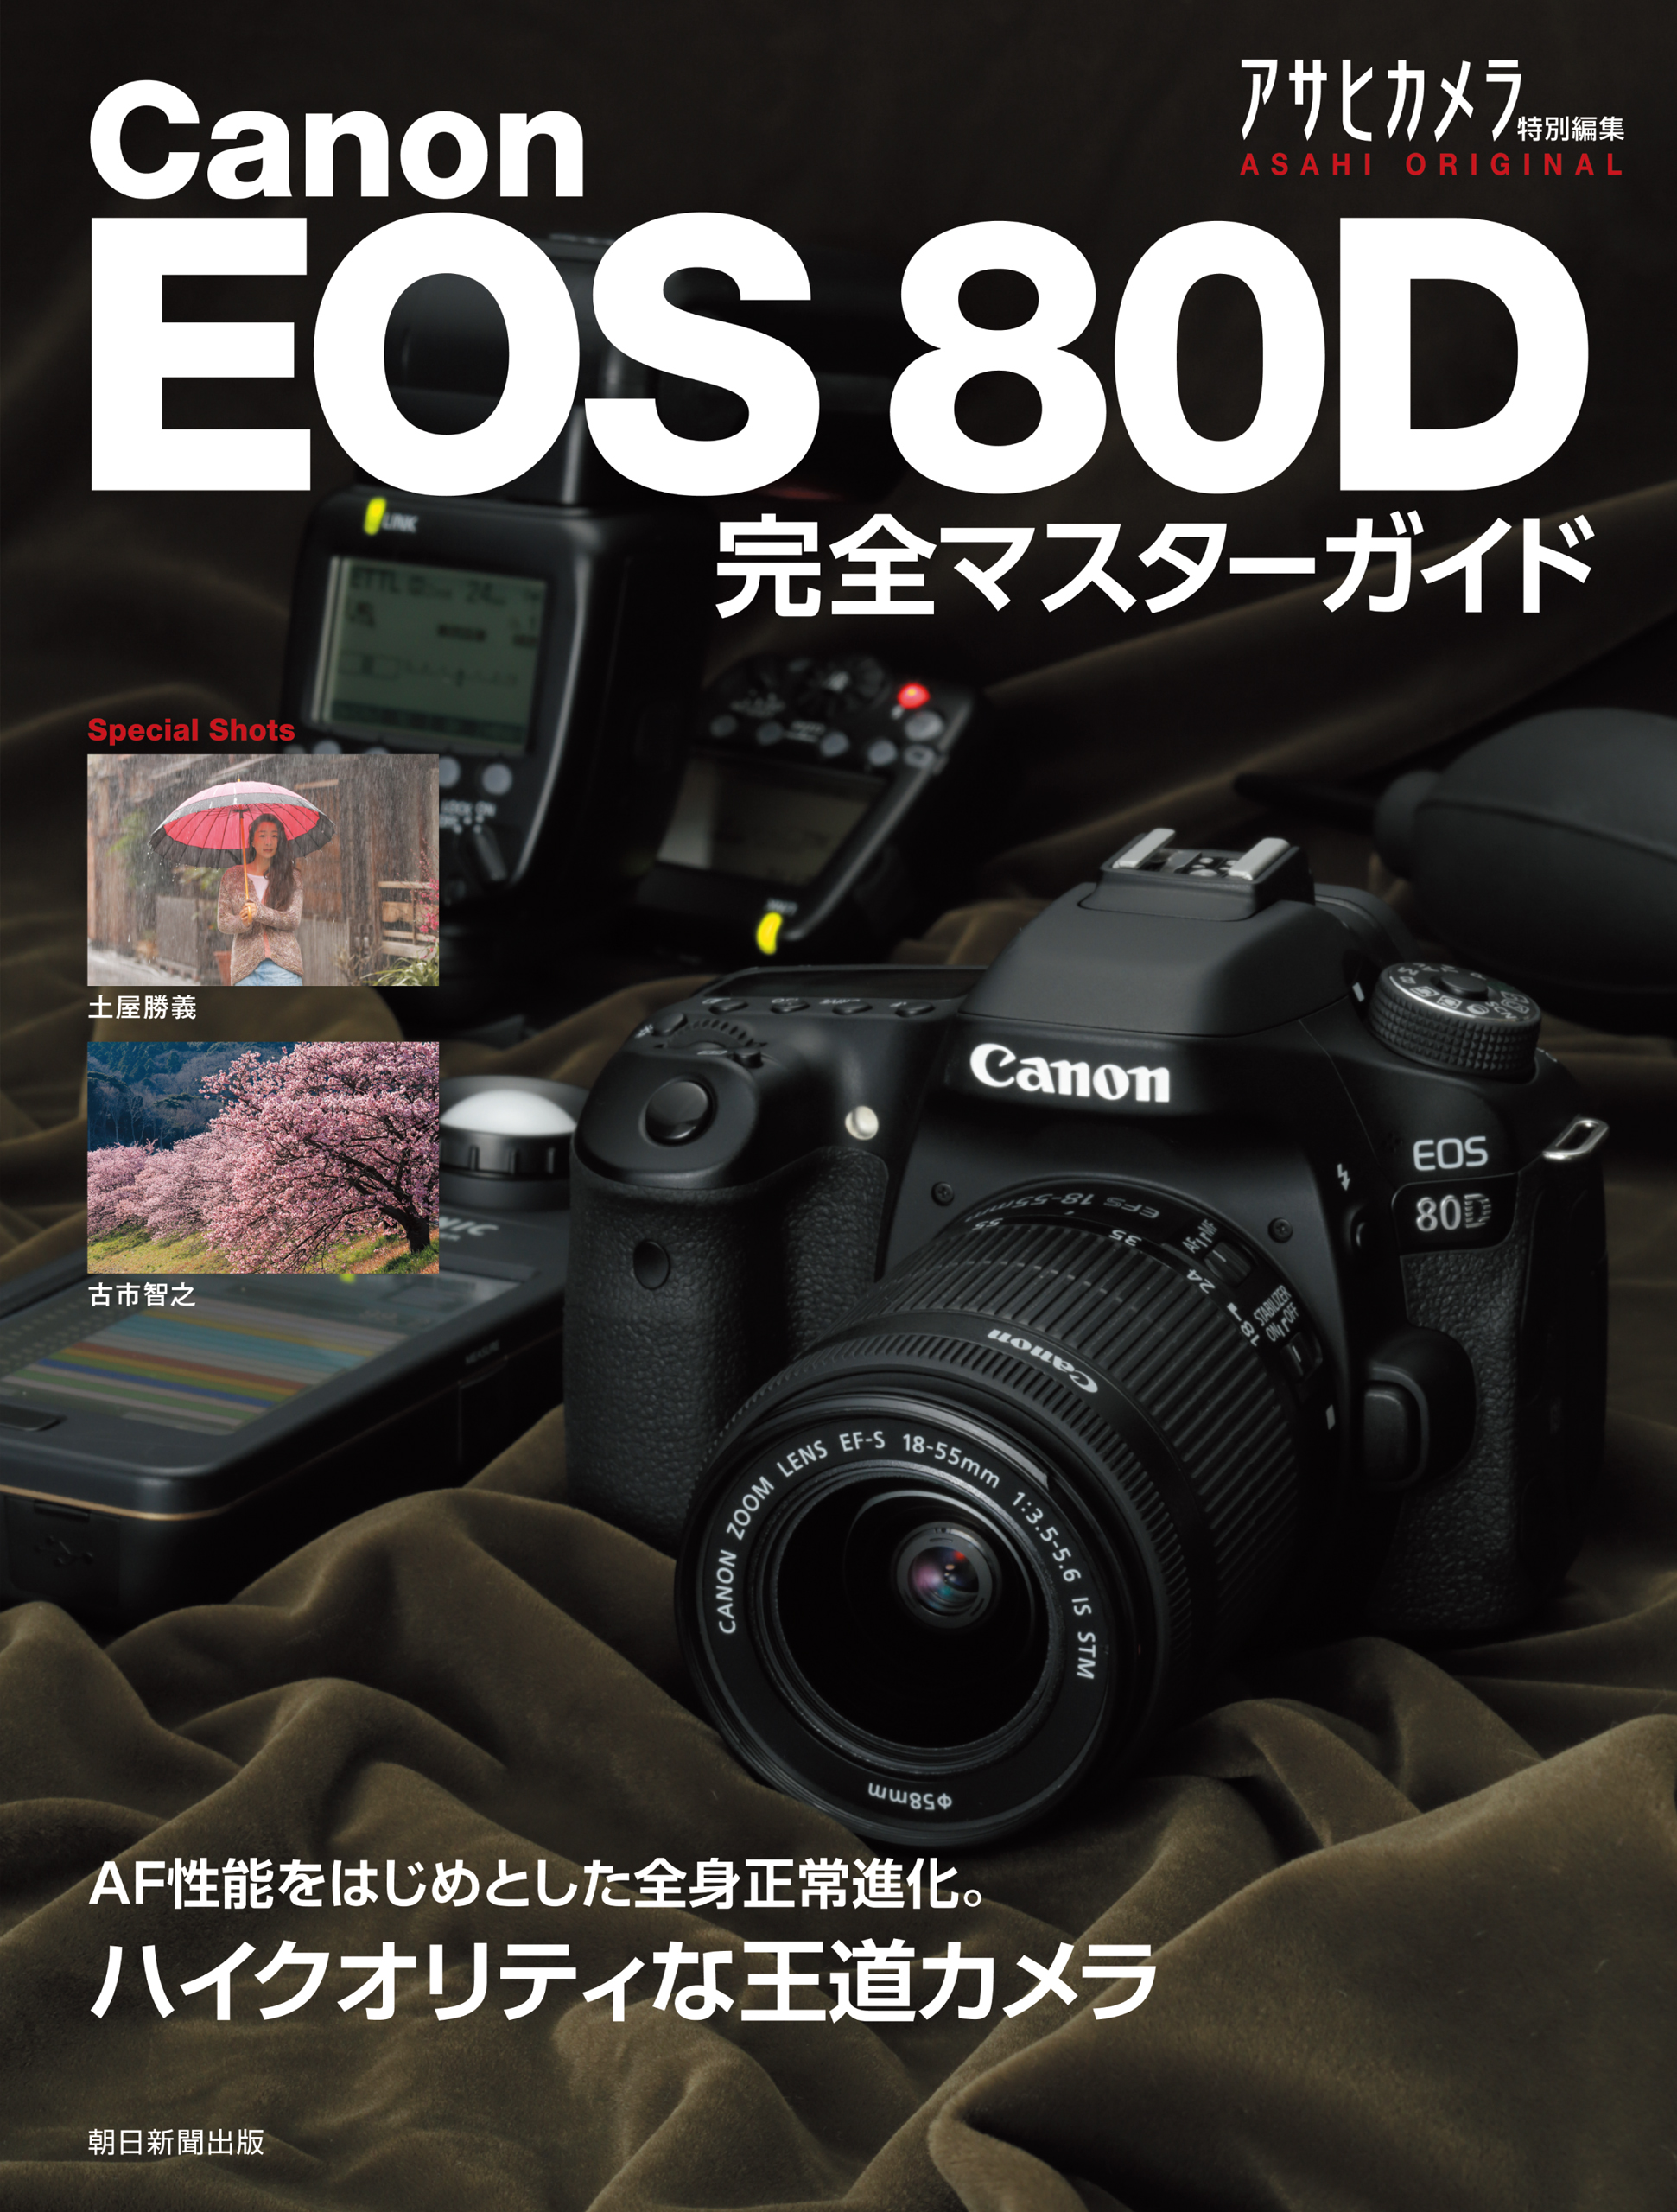 Canon EOS 80D 完全マスターガイド - アサヒカメラ編集部 - 漫画・無料